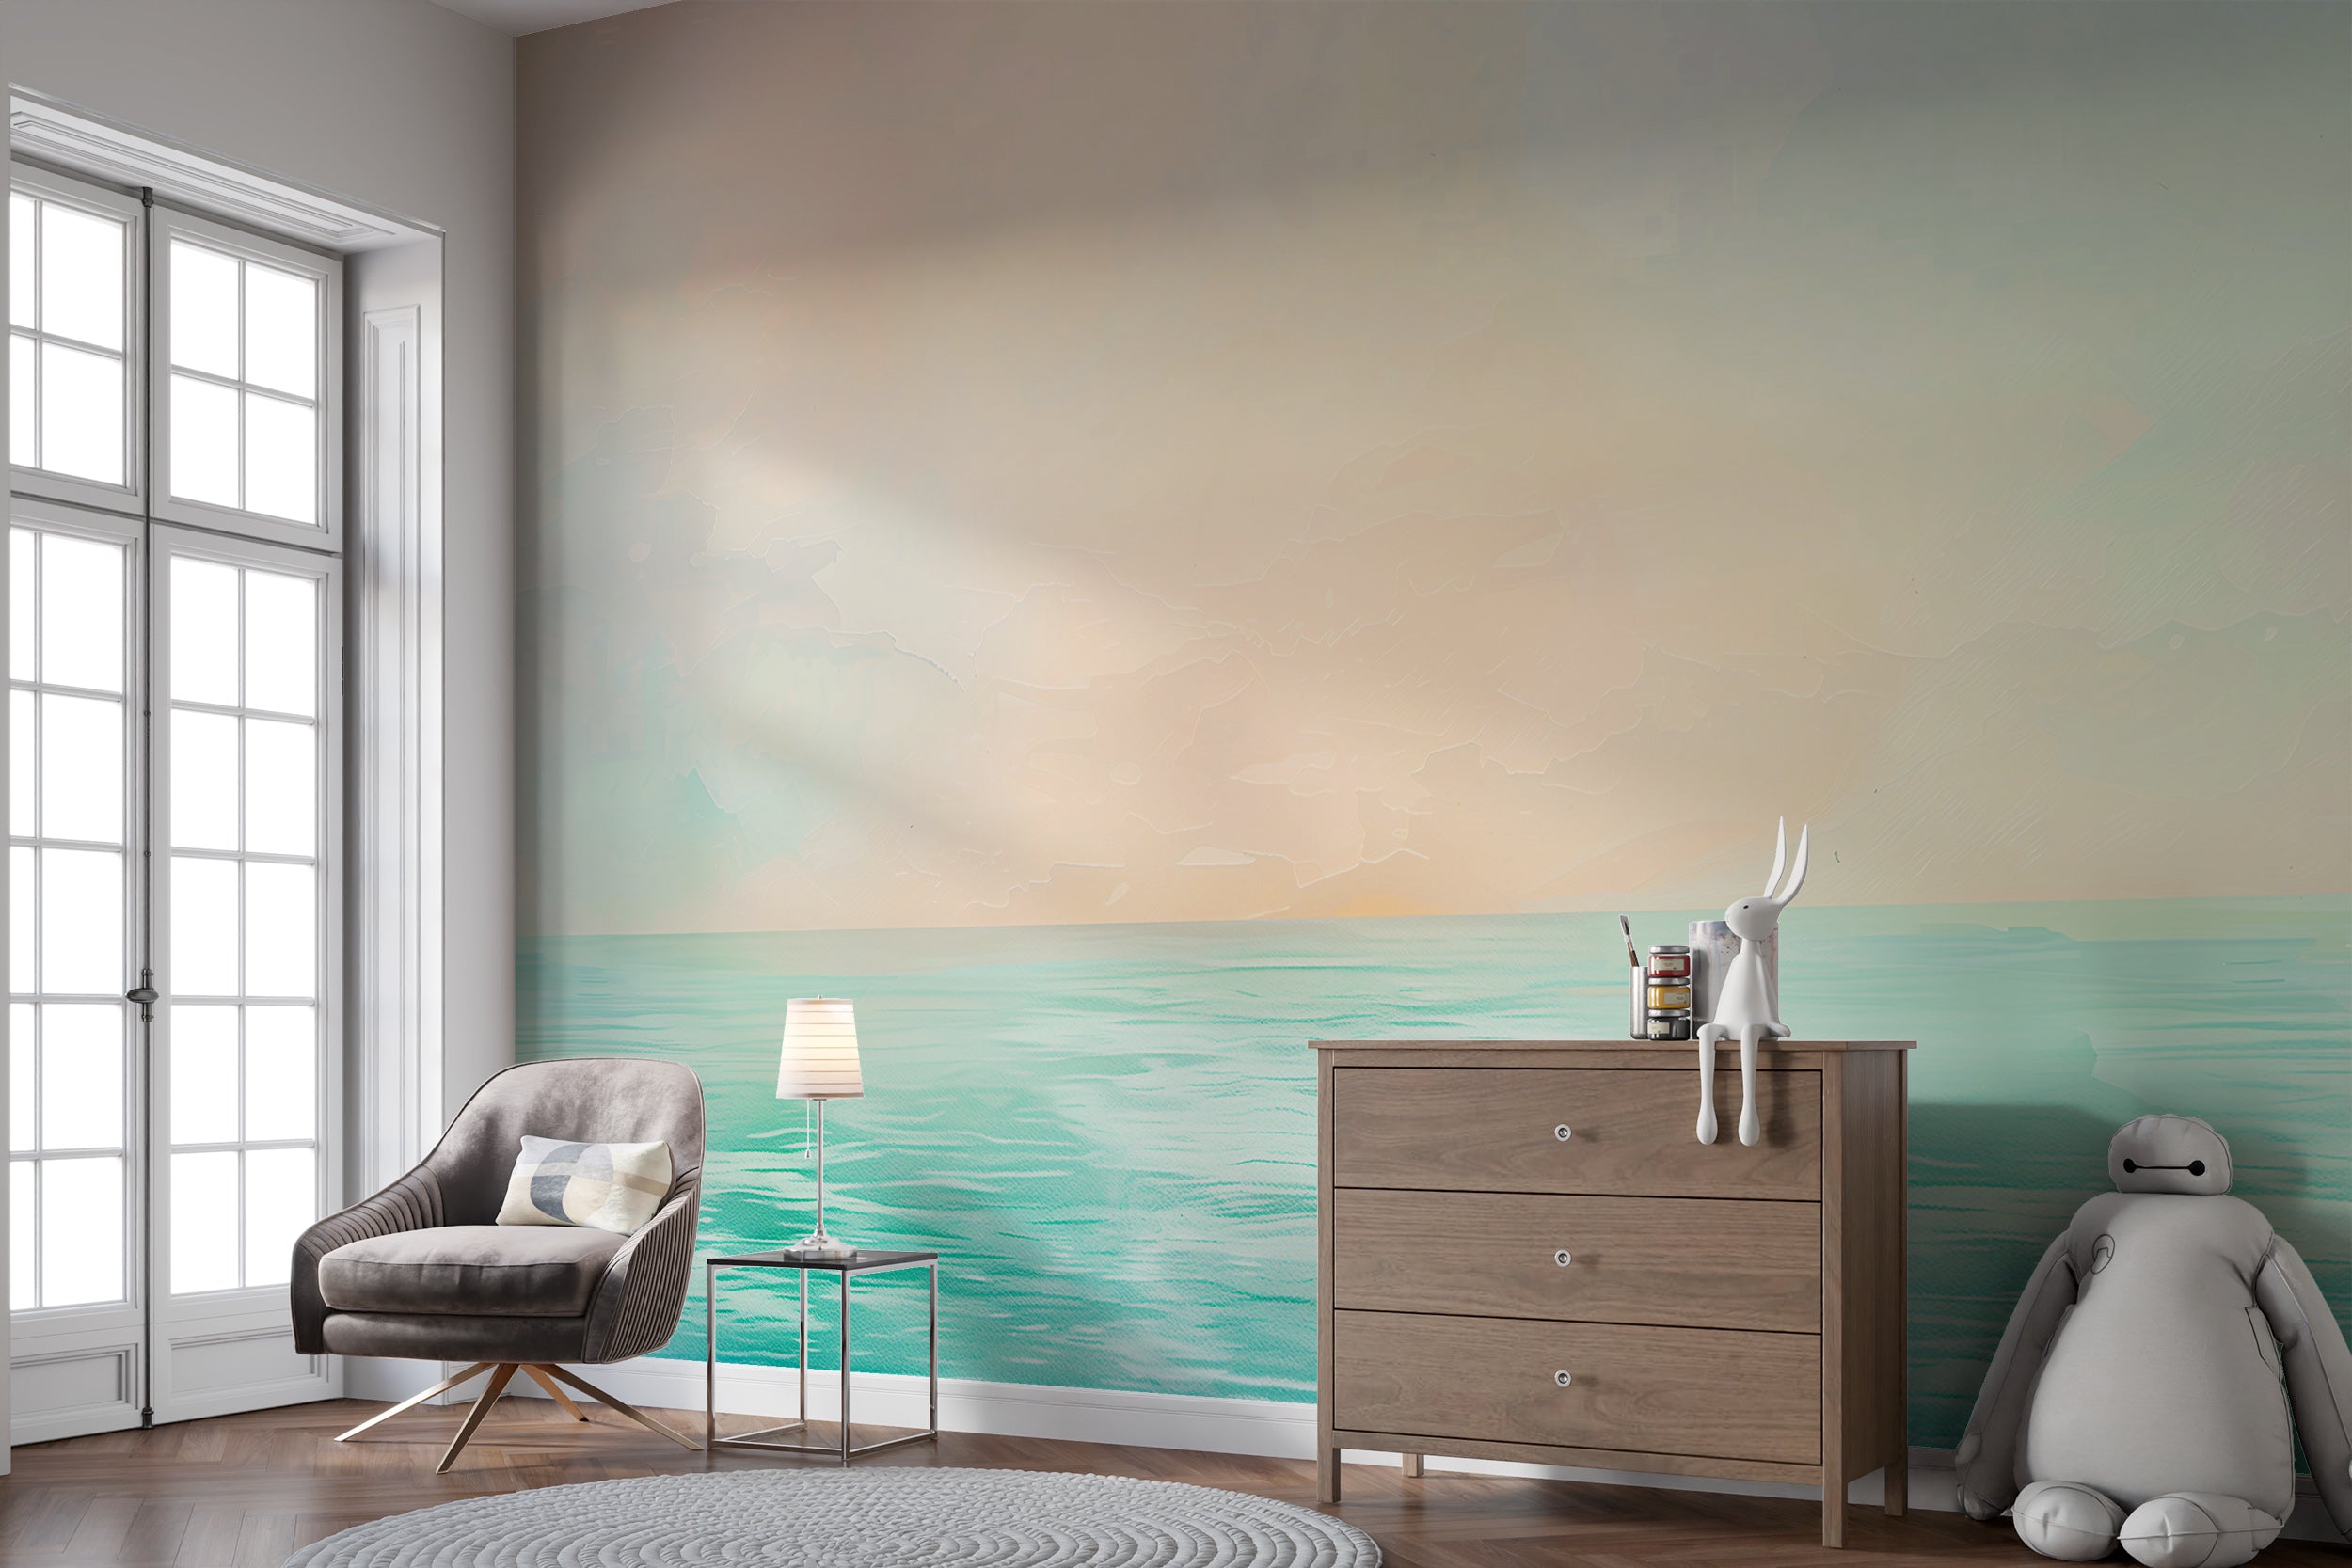 Abstract ocean horizon wall mural